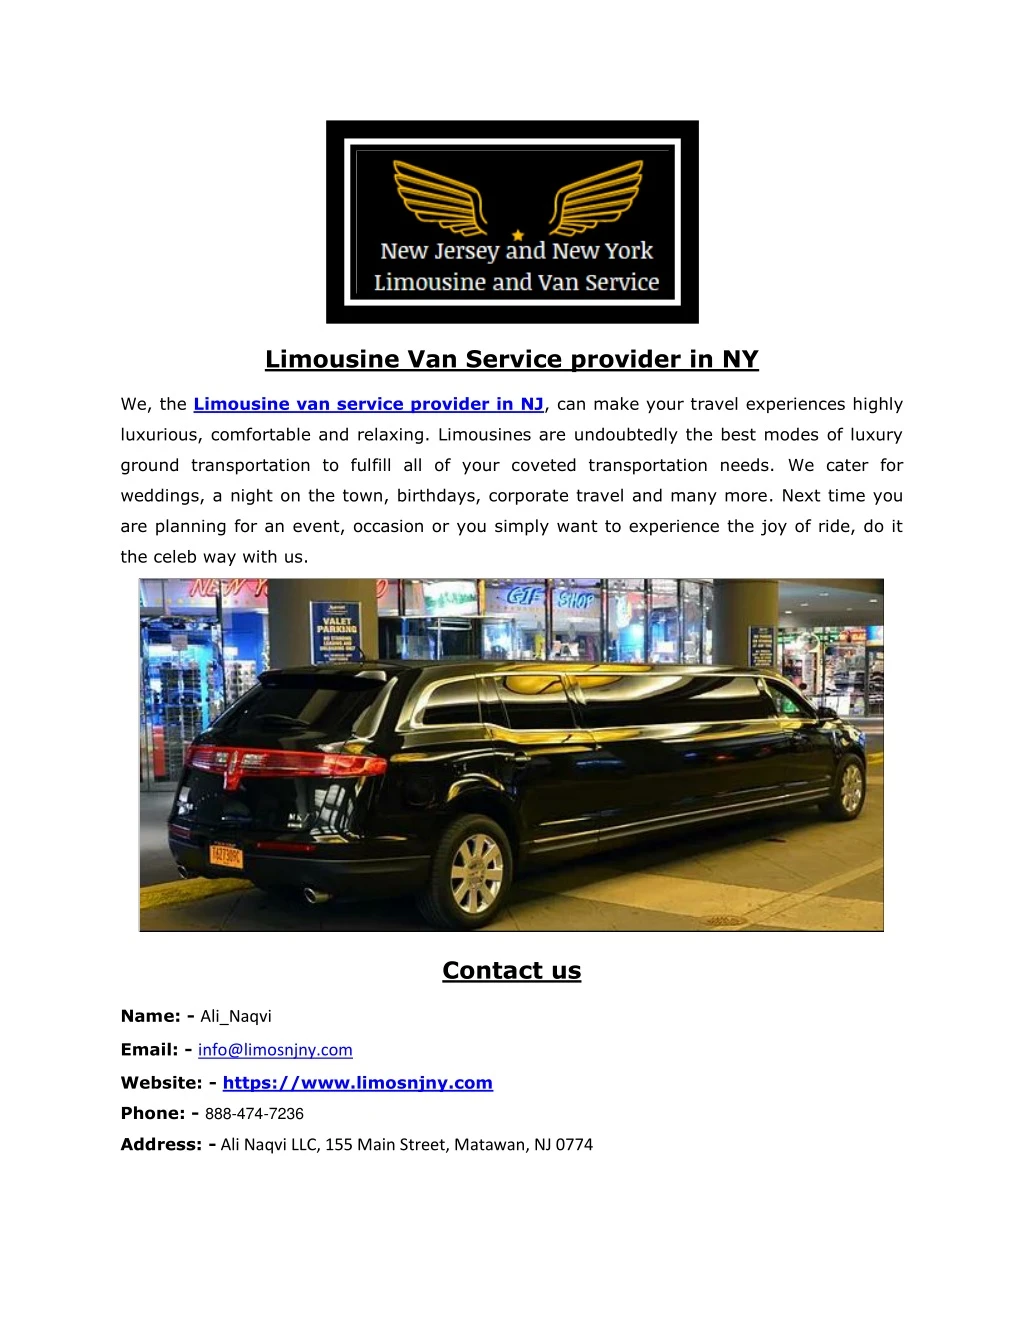 limousine van service provider in ny